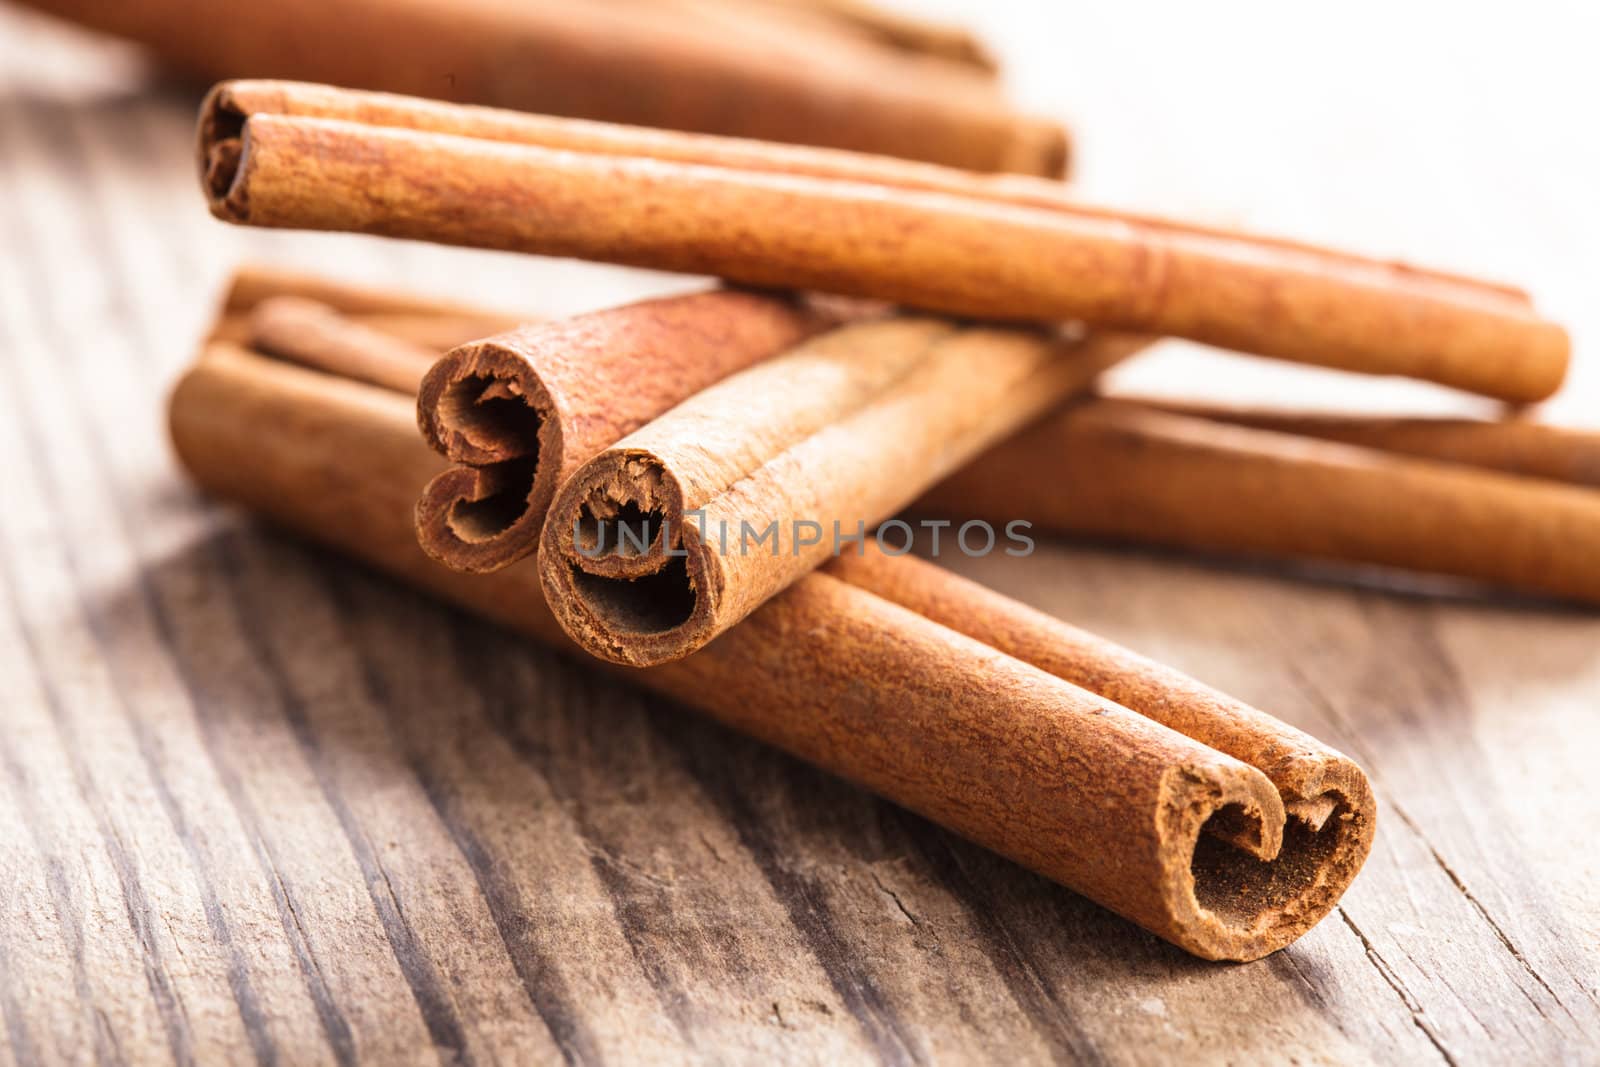 Cinnamon sticks by oksix